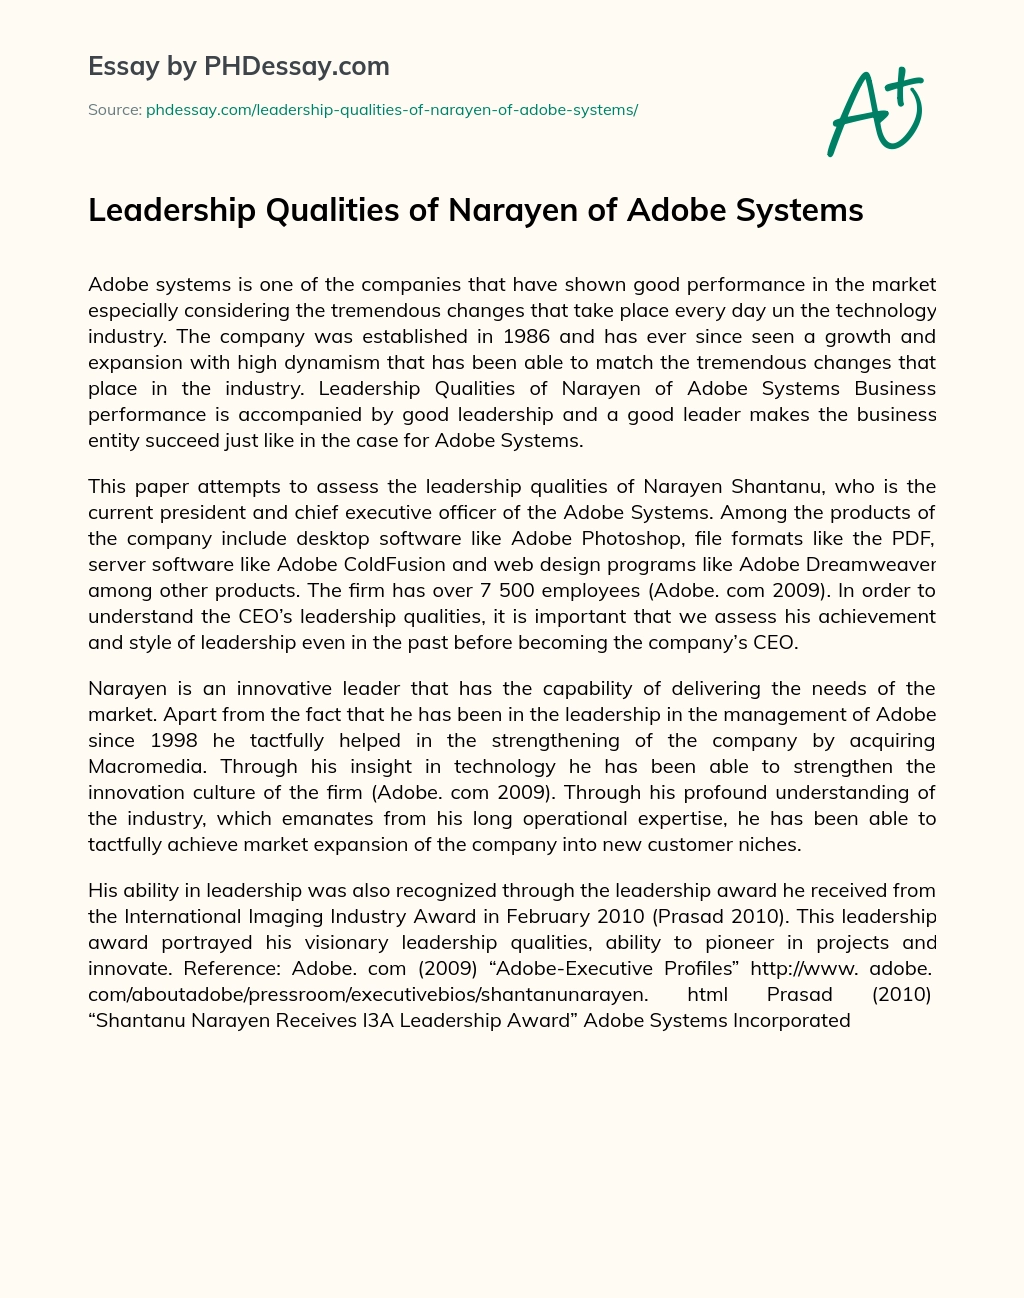 Leadership Qualities of Narayen of Adobe Systems essay